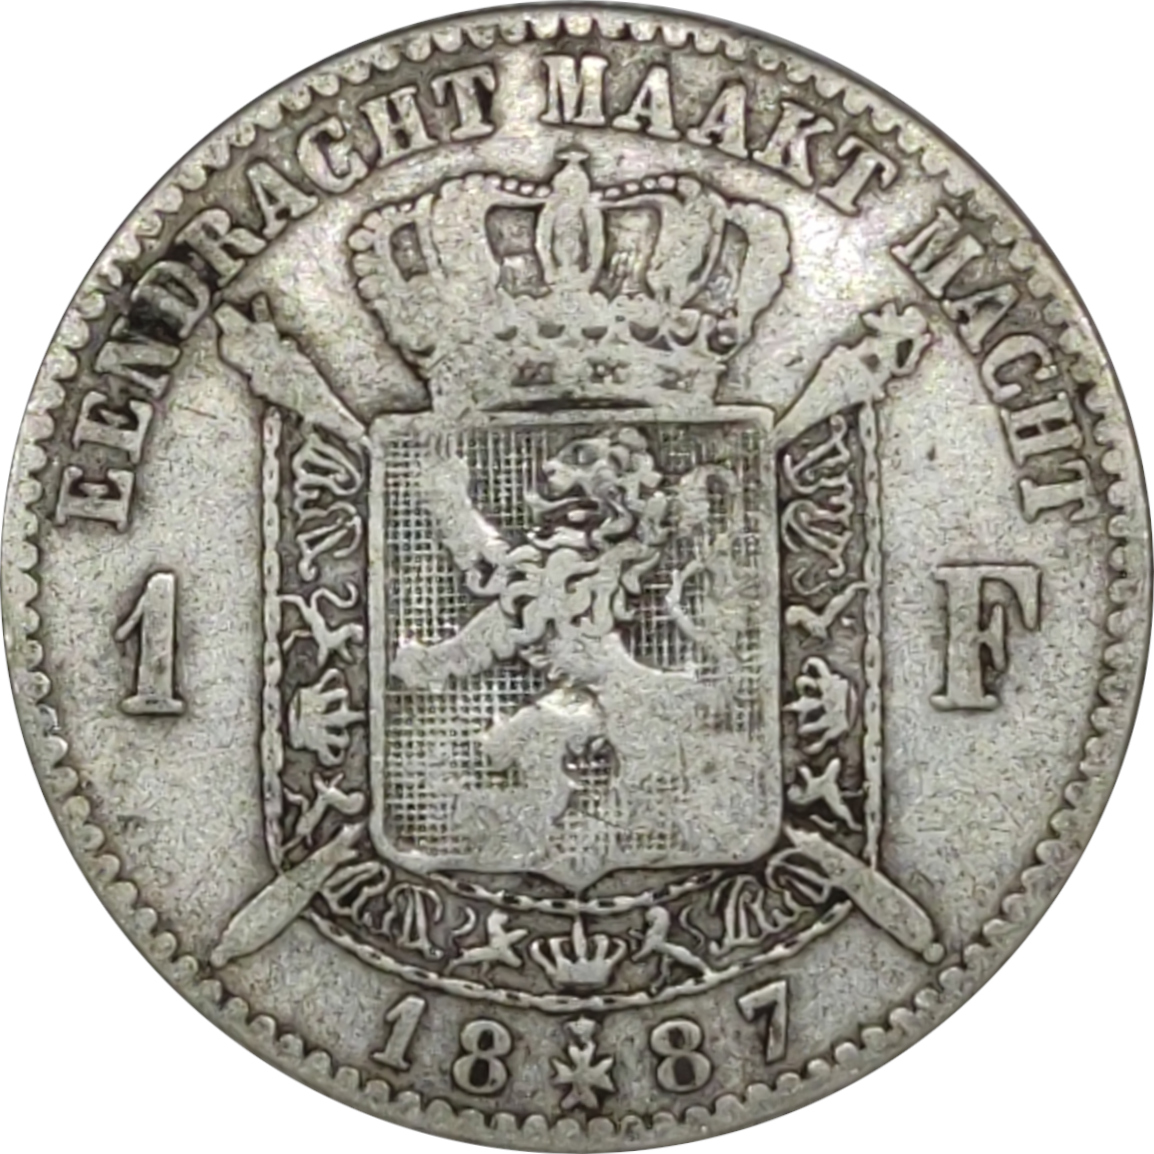 1 franc - Leopold II - Young head